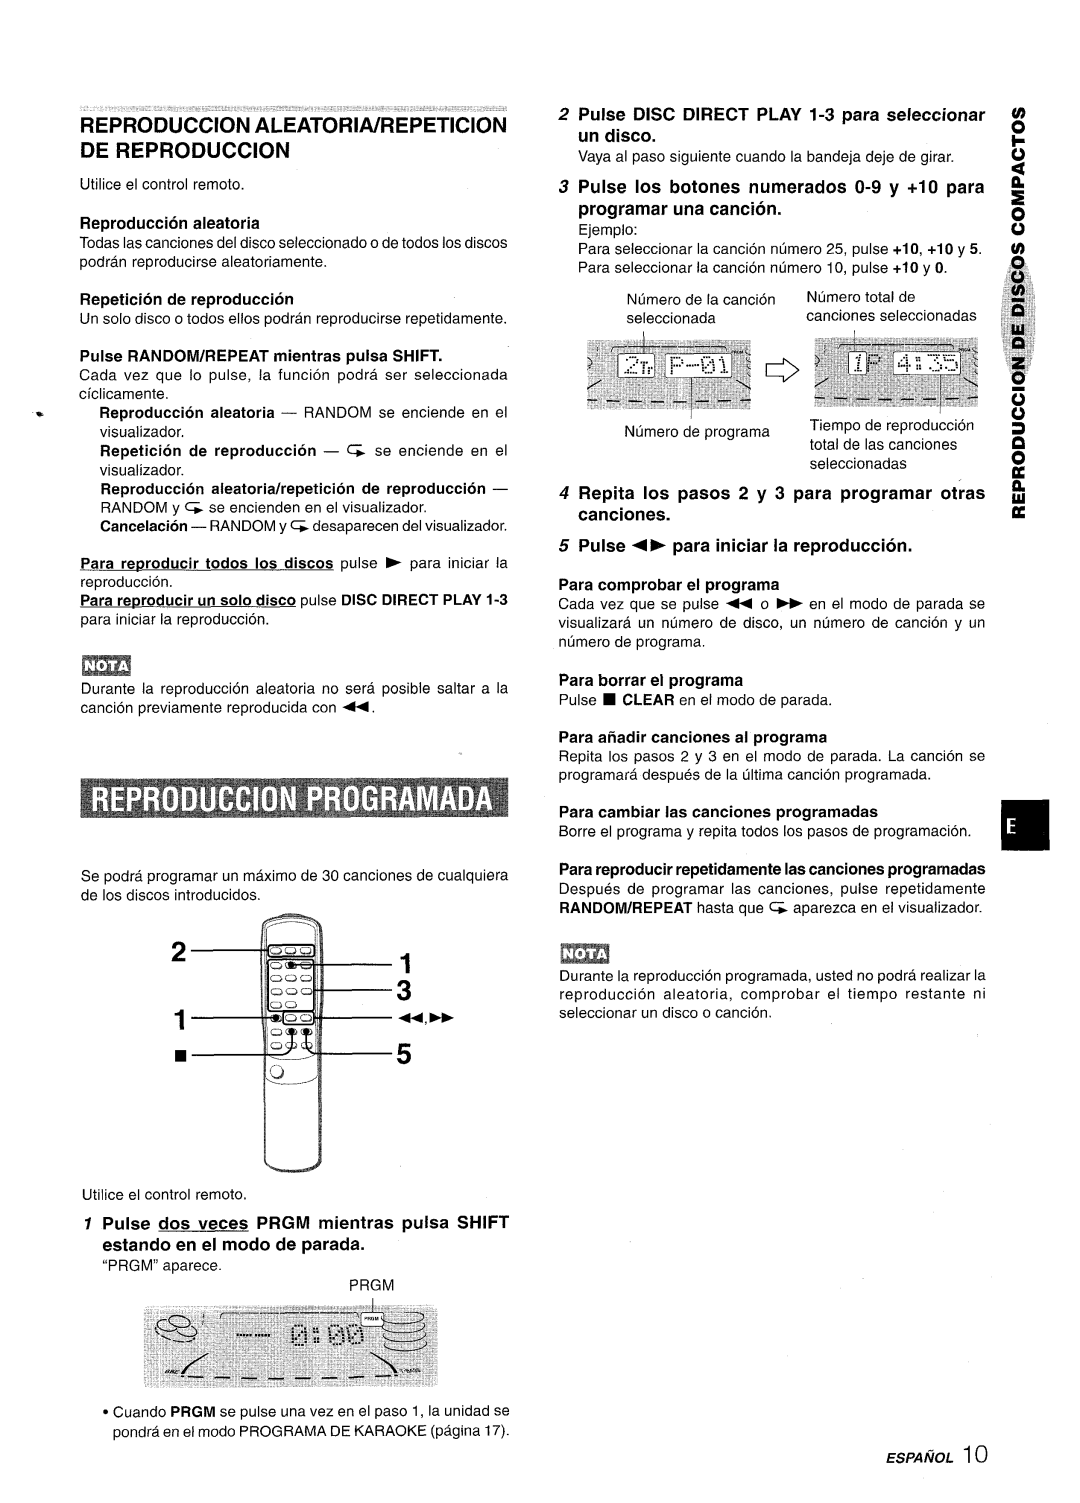 Aiwa NSX-A508 manual Reproduc-Cion Aleatoriwrep’Eticion De Reproduction, if%==%%, Pulse + para iniciar la reproduction 